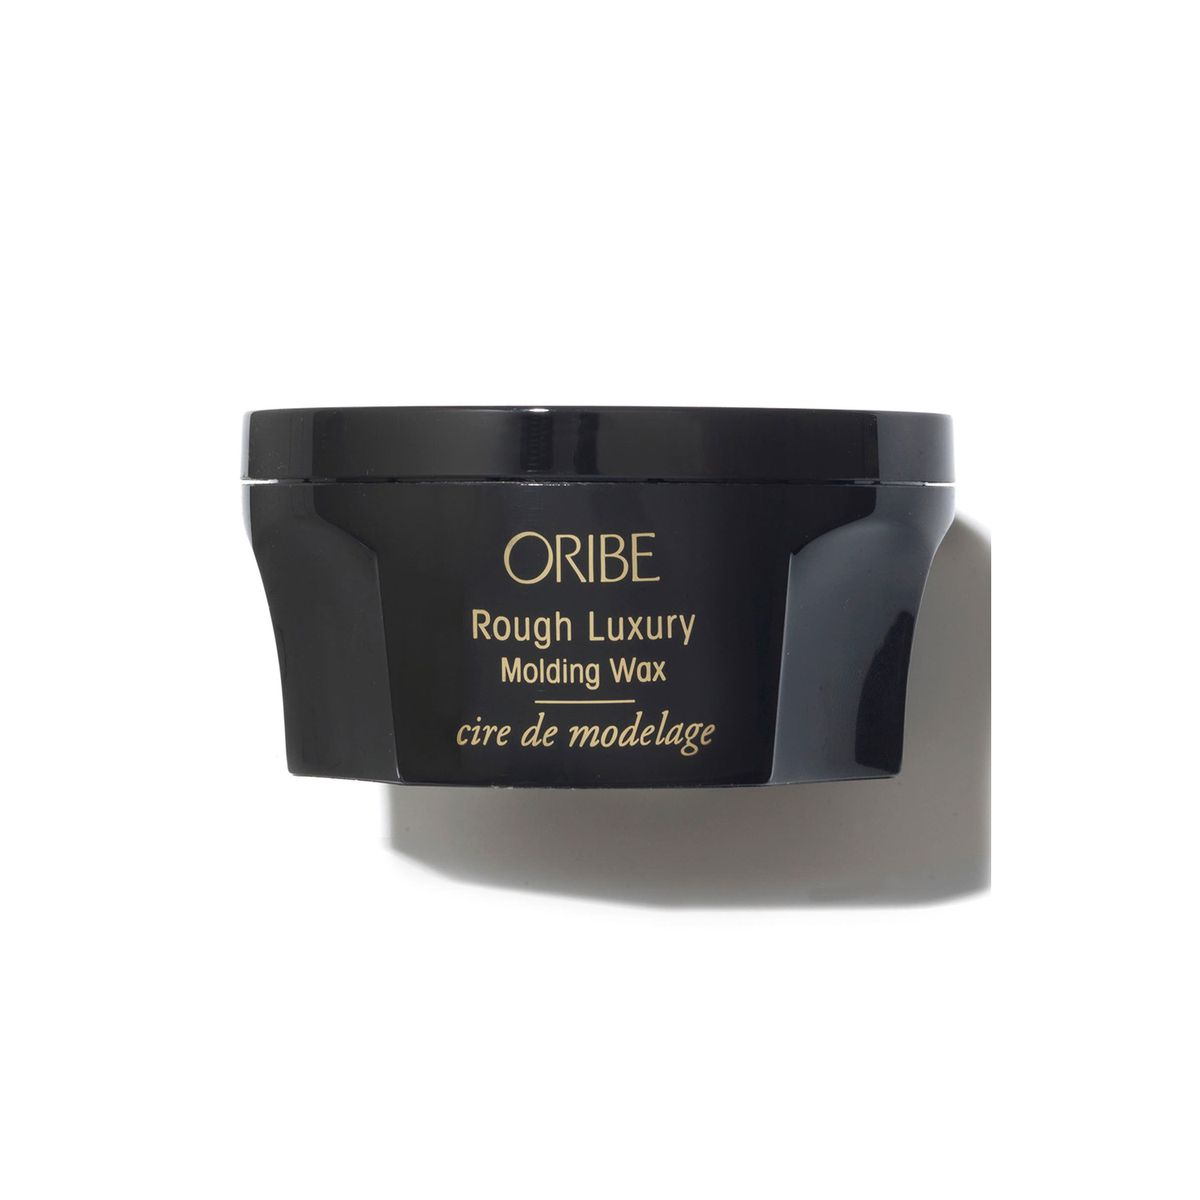 Oribe hair care